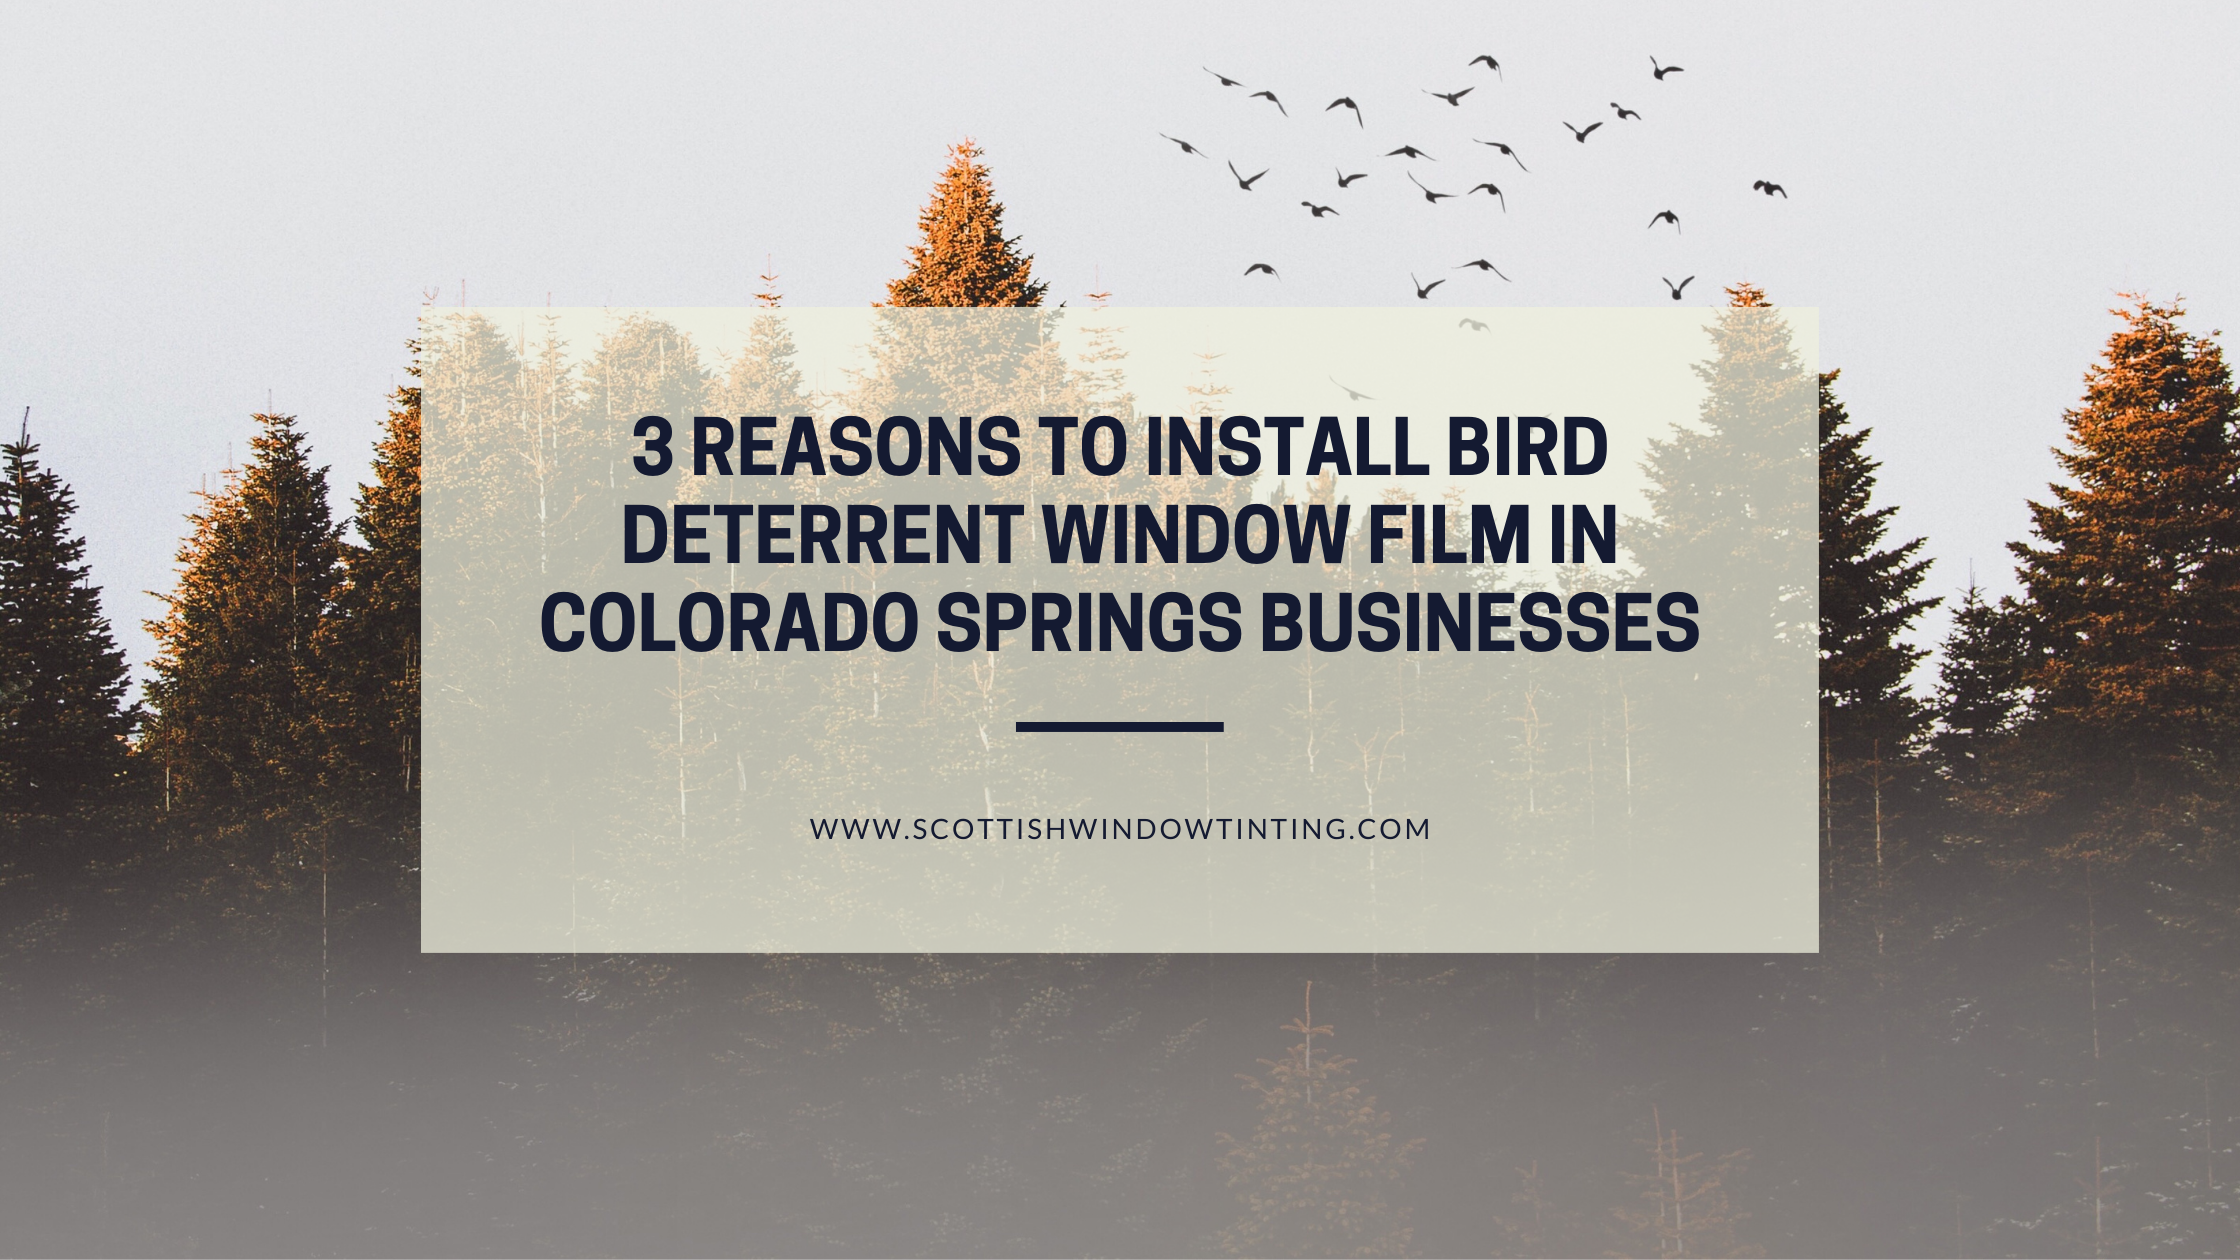 3 Reasons to Install Bird Deterrent Window Film in Colorado Springs Businesses